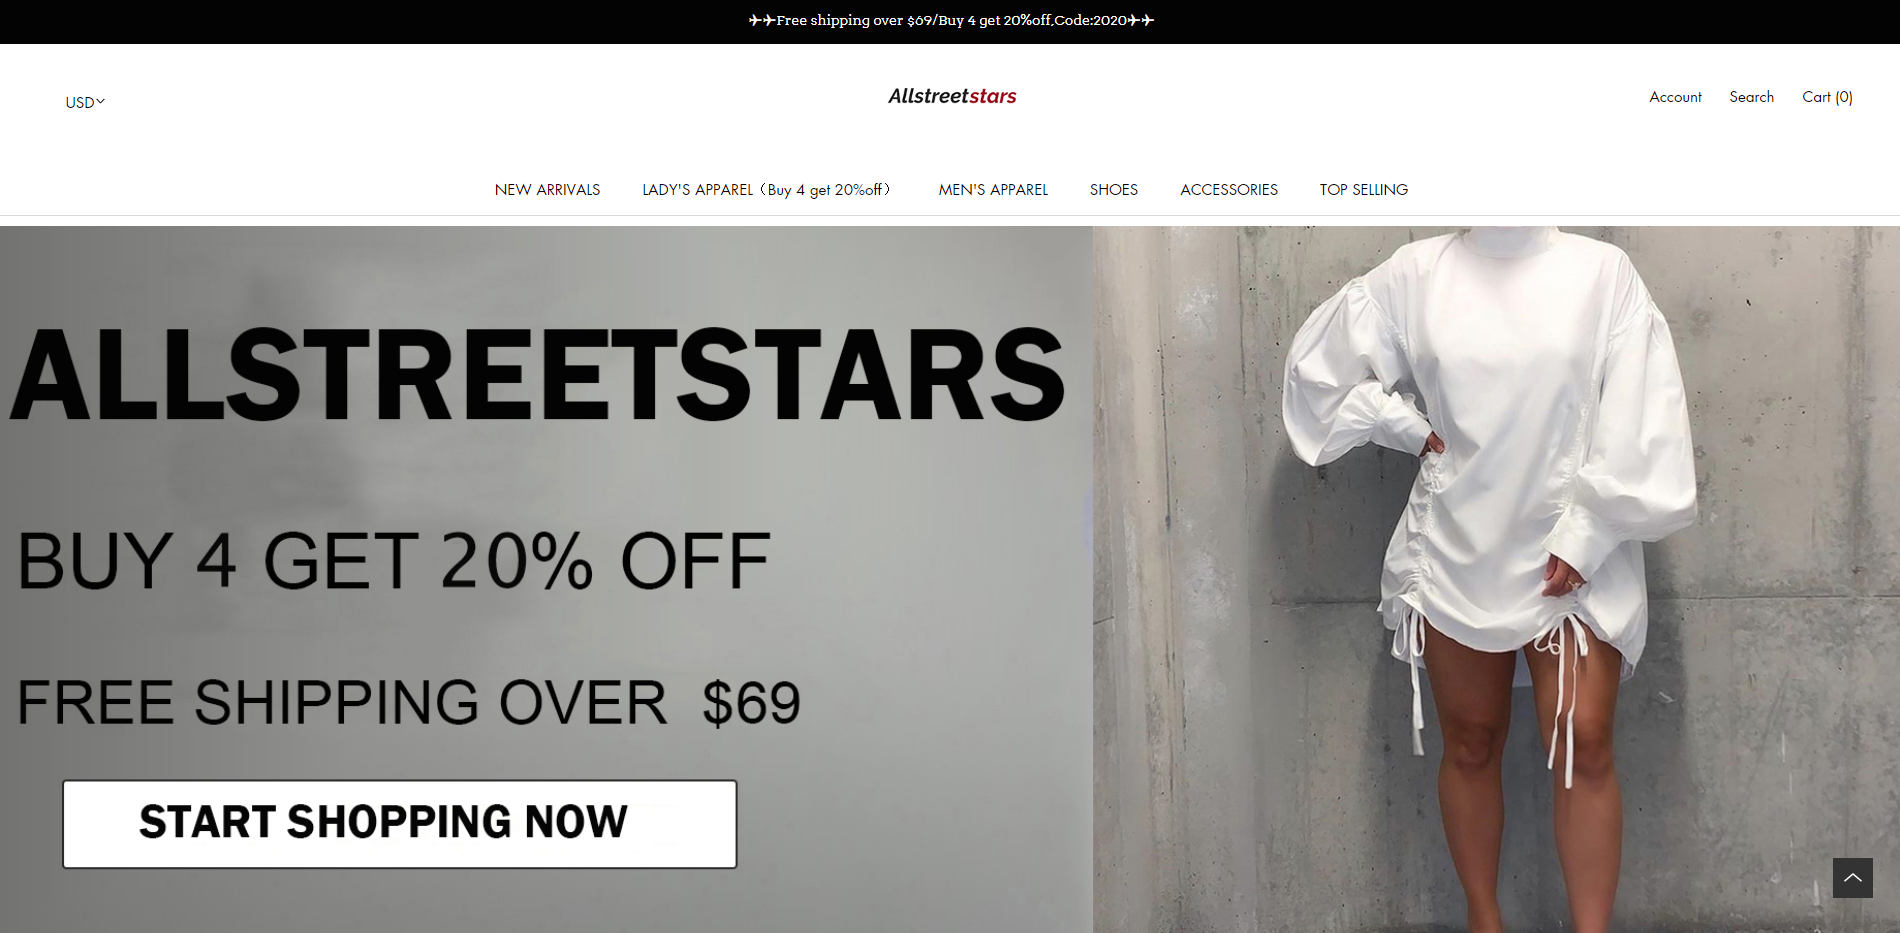 allstreetstars scam home page